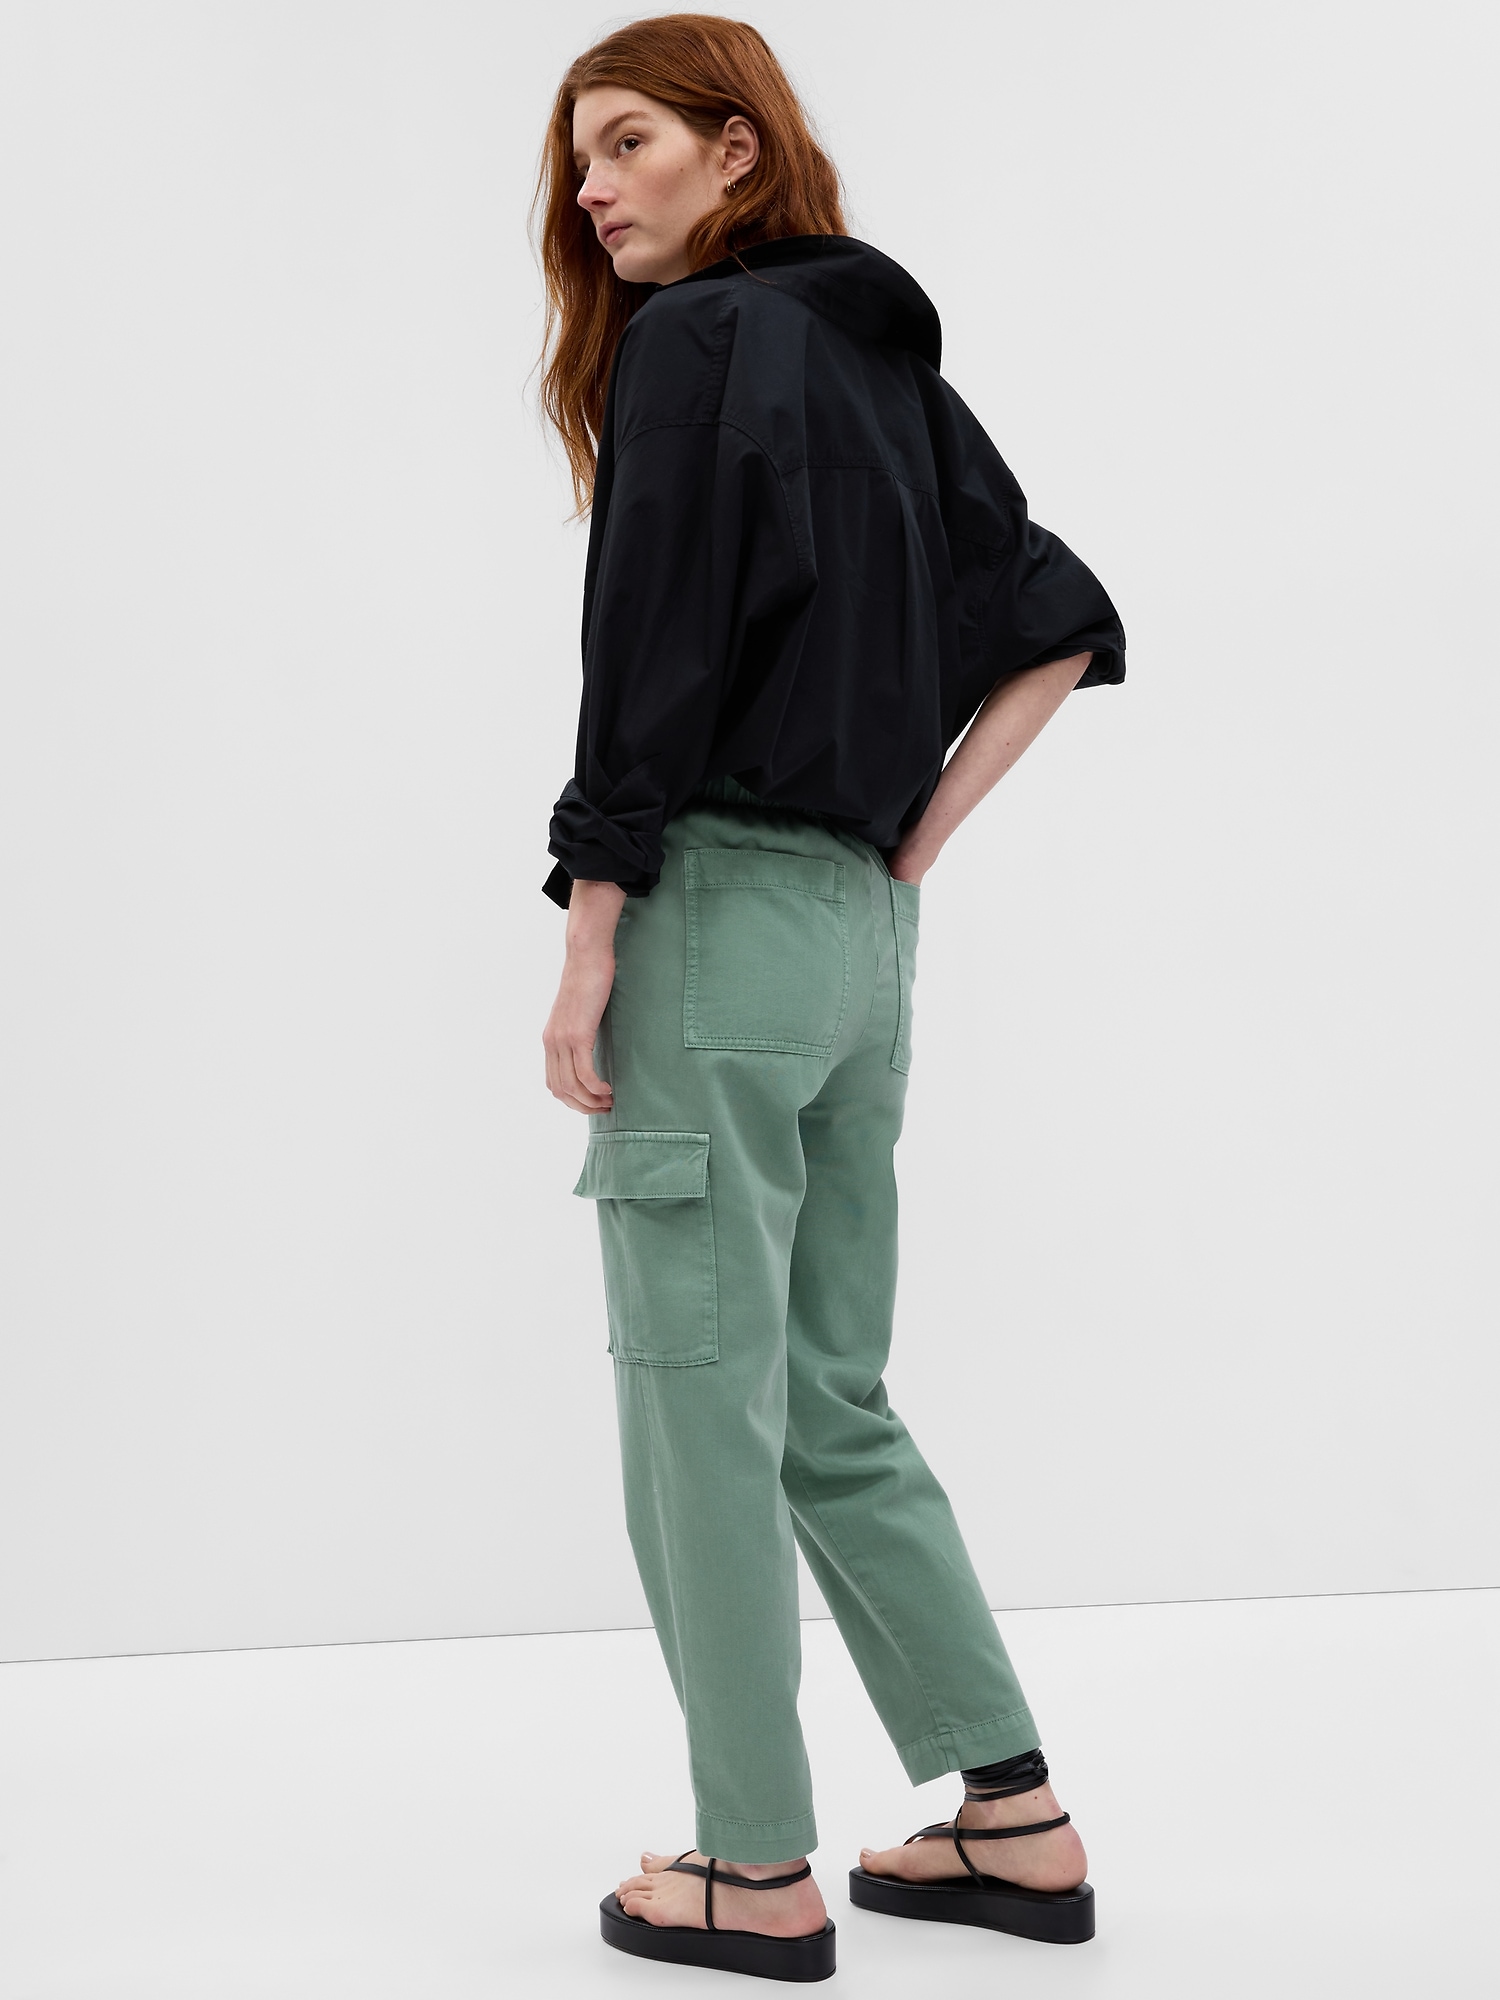 Women's Dark Green Cargo Pants: Straight Leg Design with Pockets